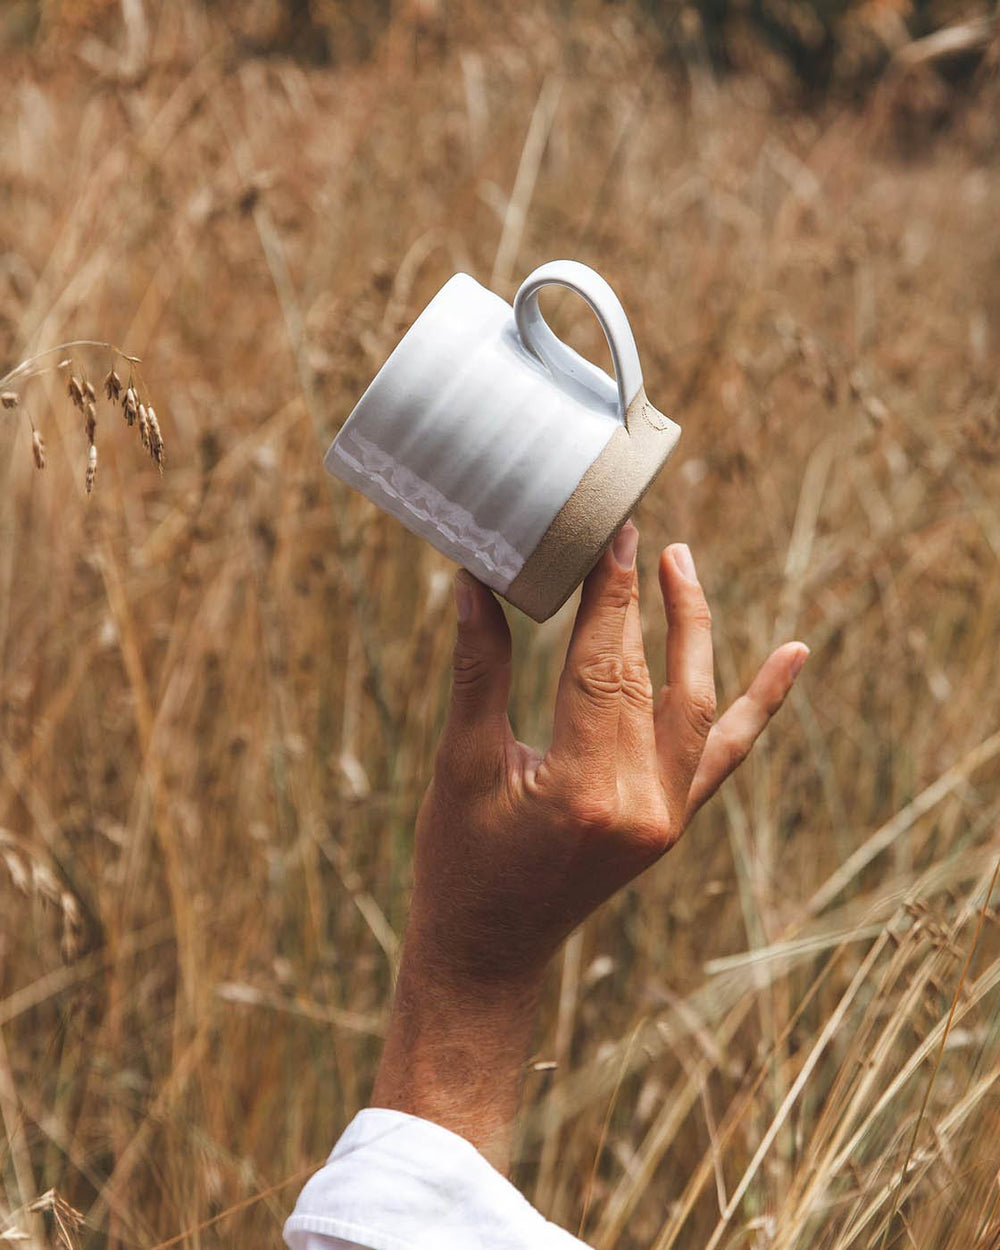 Silo Mug & Coffee Gift Set – Farmhouse Pottery